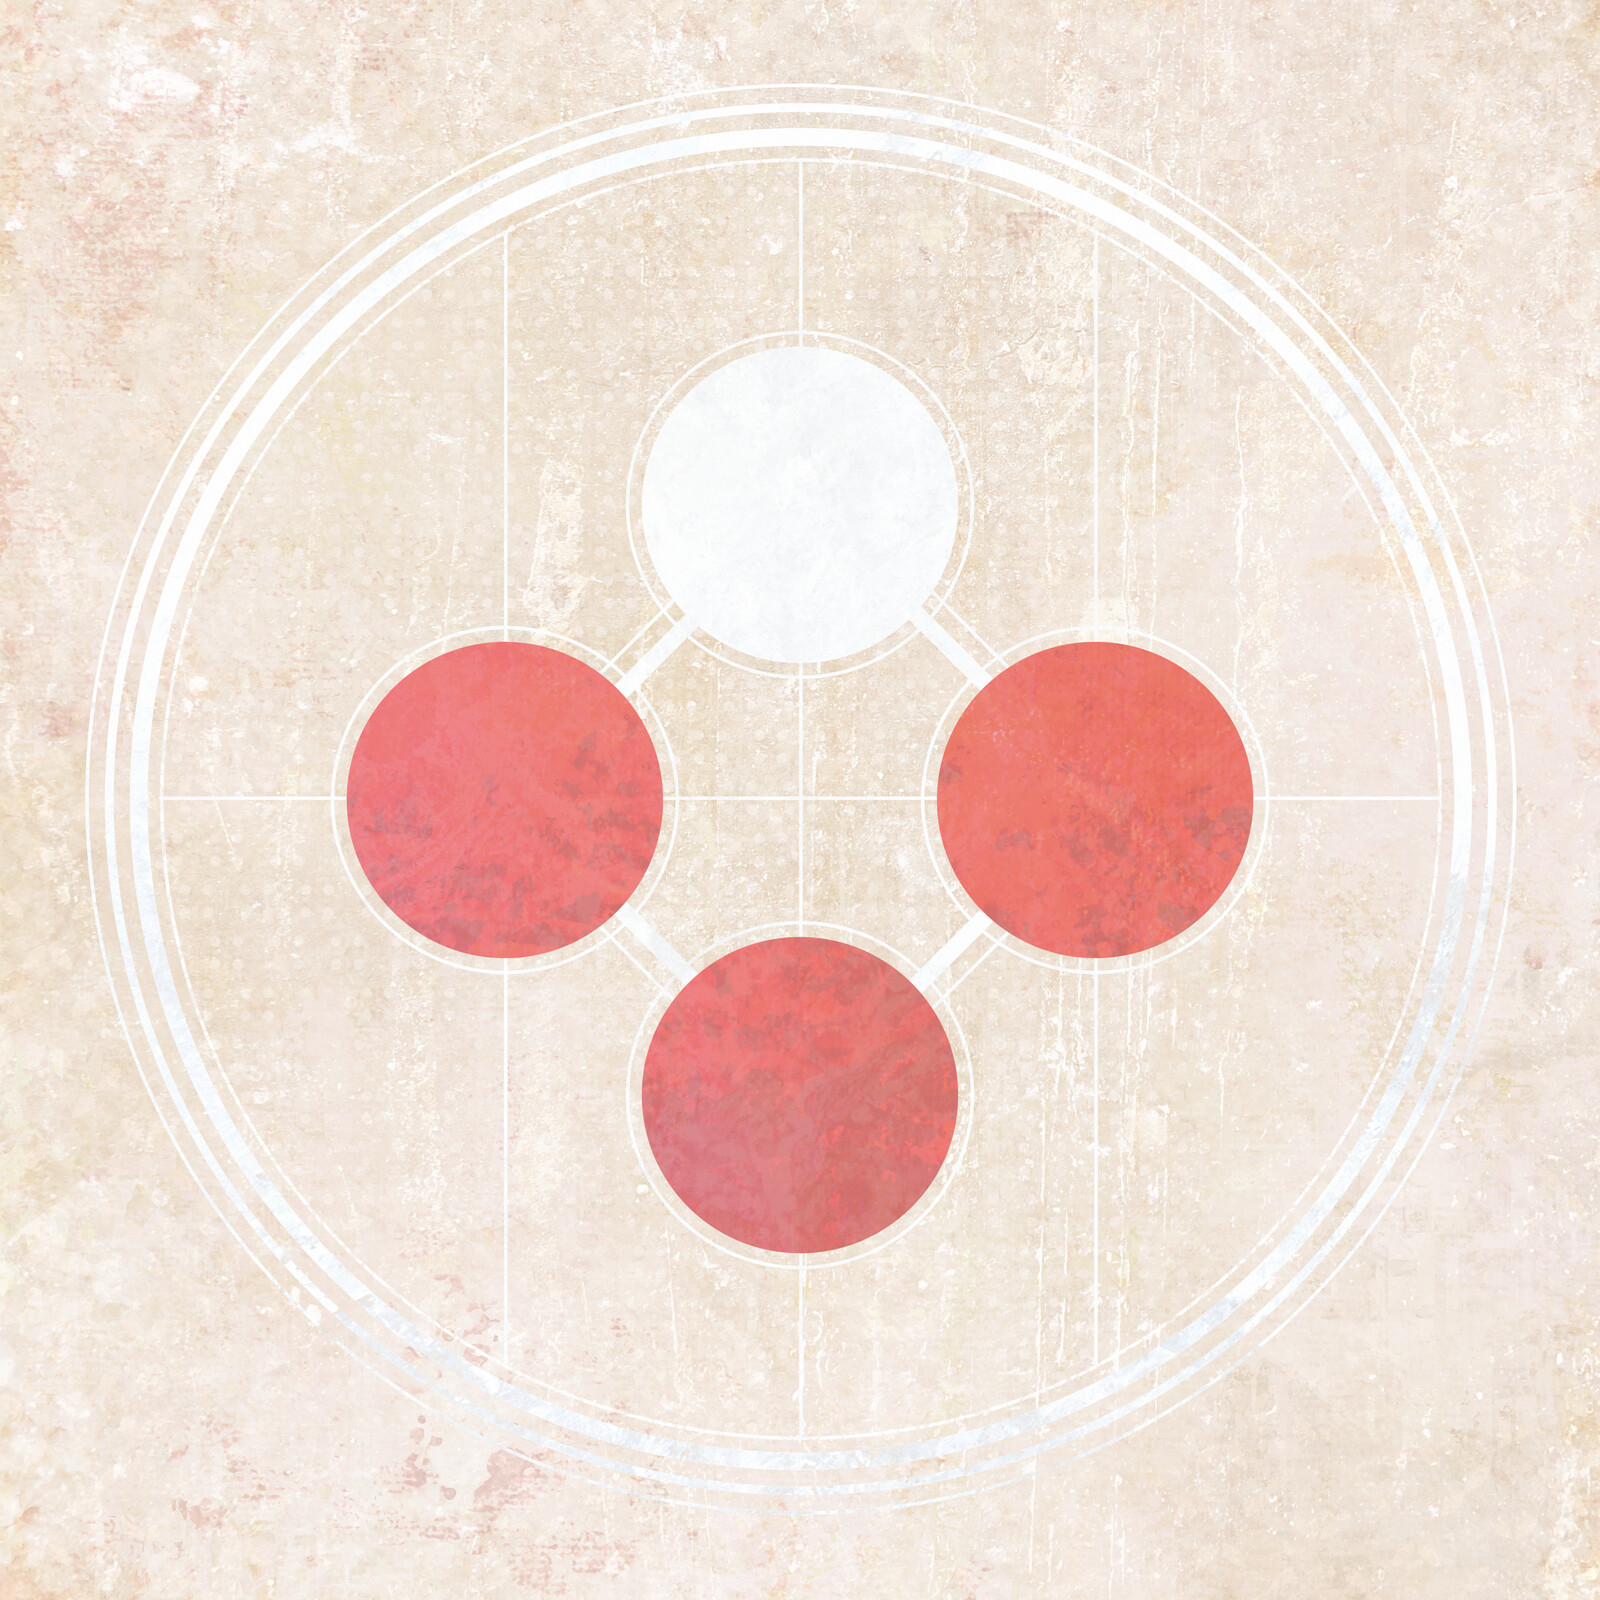 A white circle above three red circles.